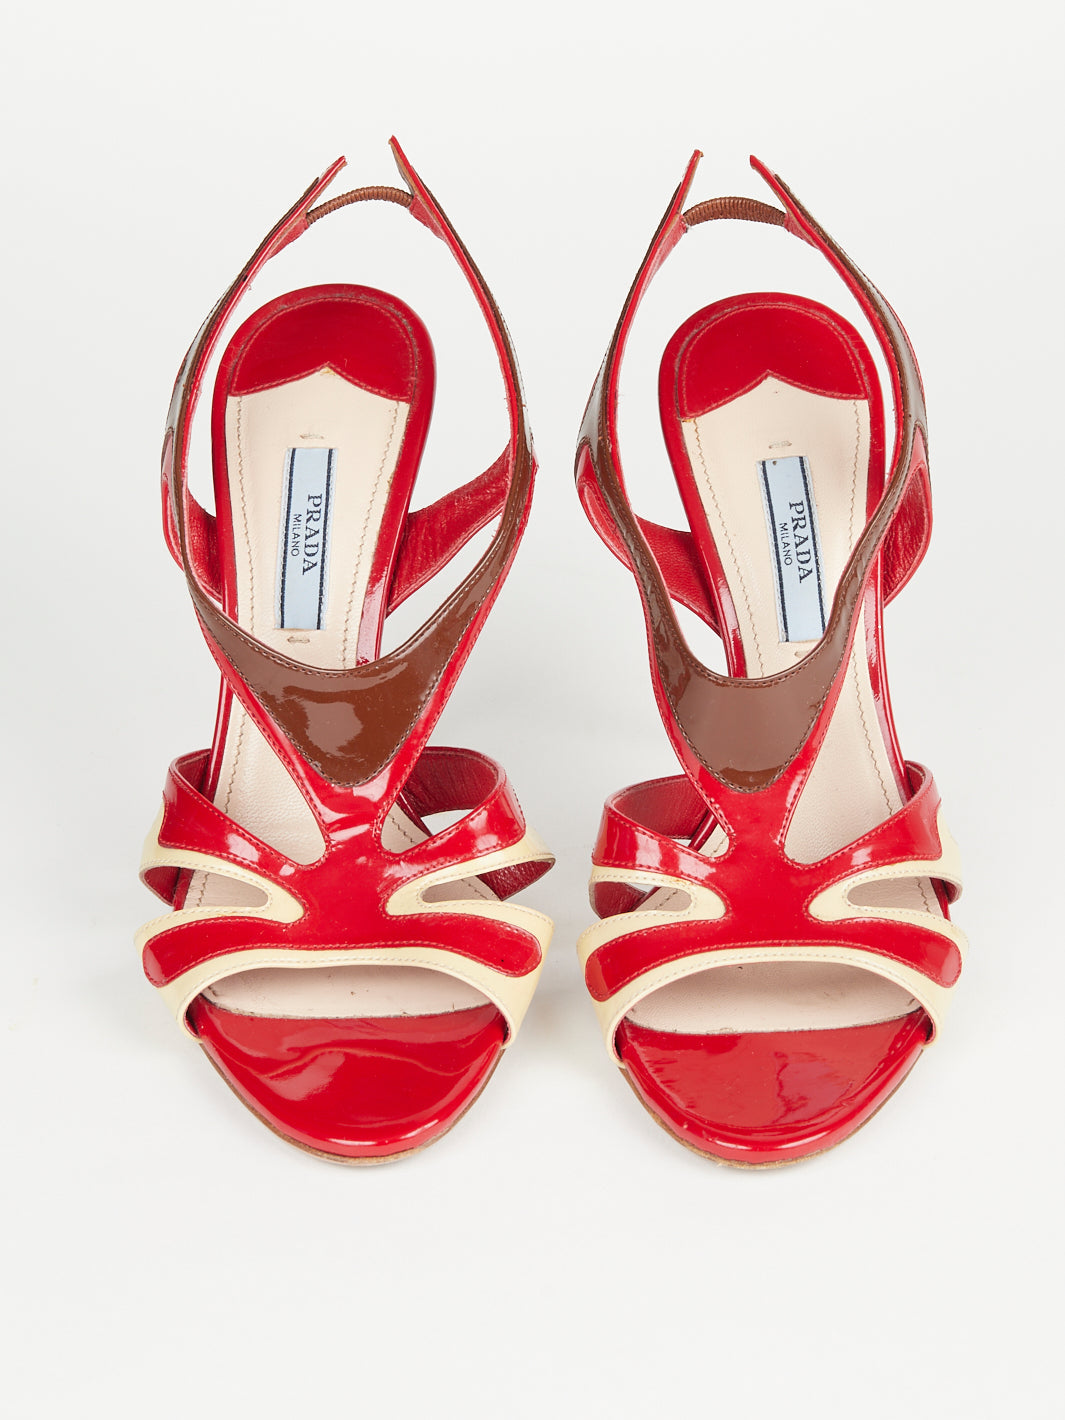 2010 Prada slingback Fiamma sandal in patent leather with heel